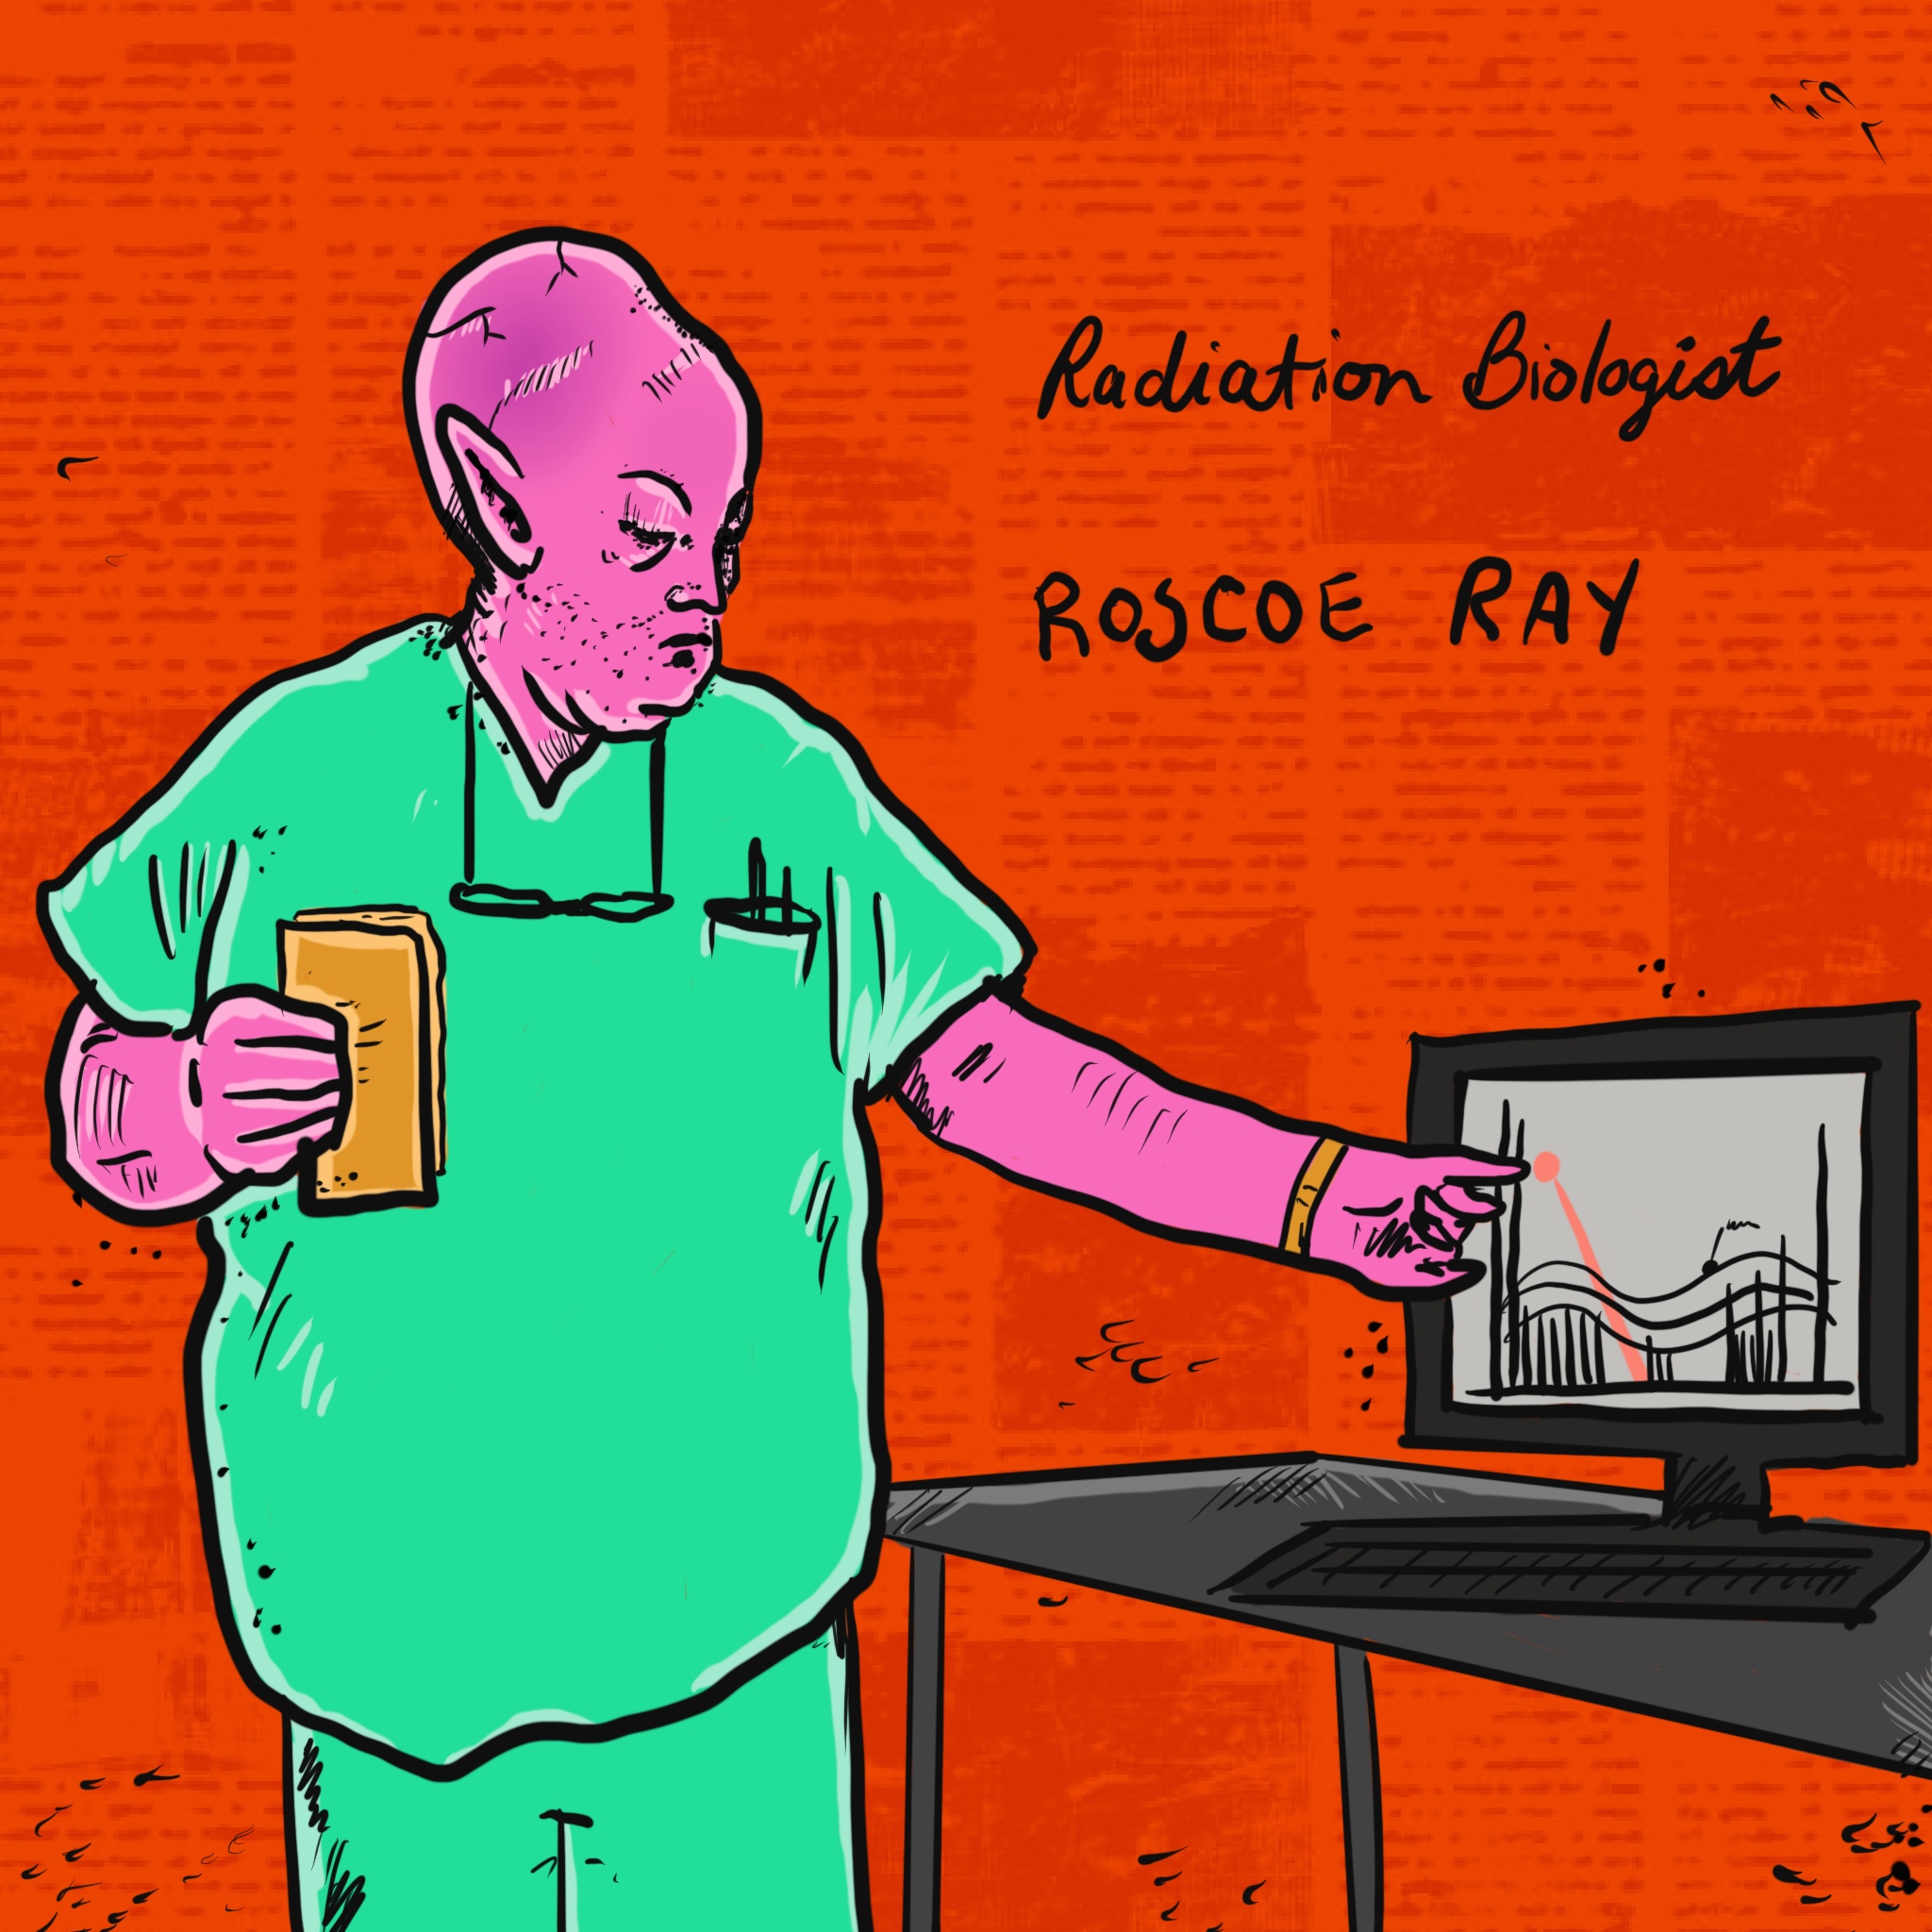 Roscoe Ray (Radiation Biologist)